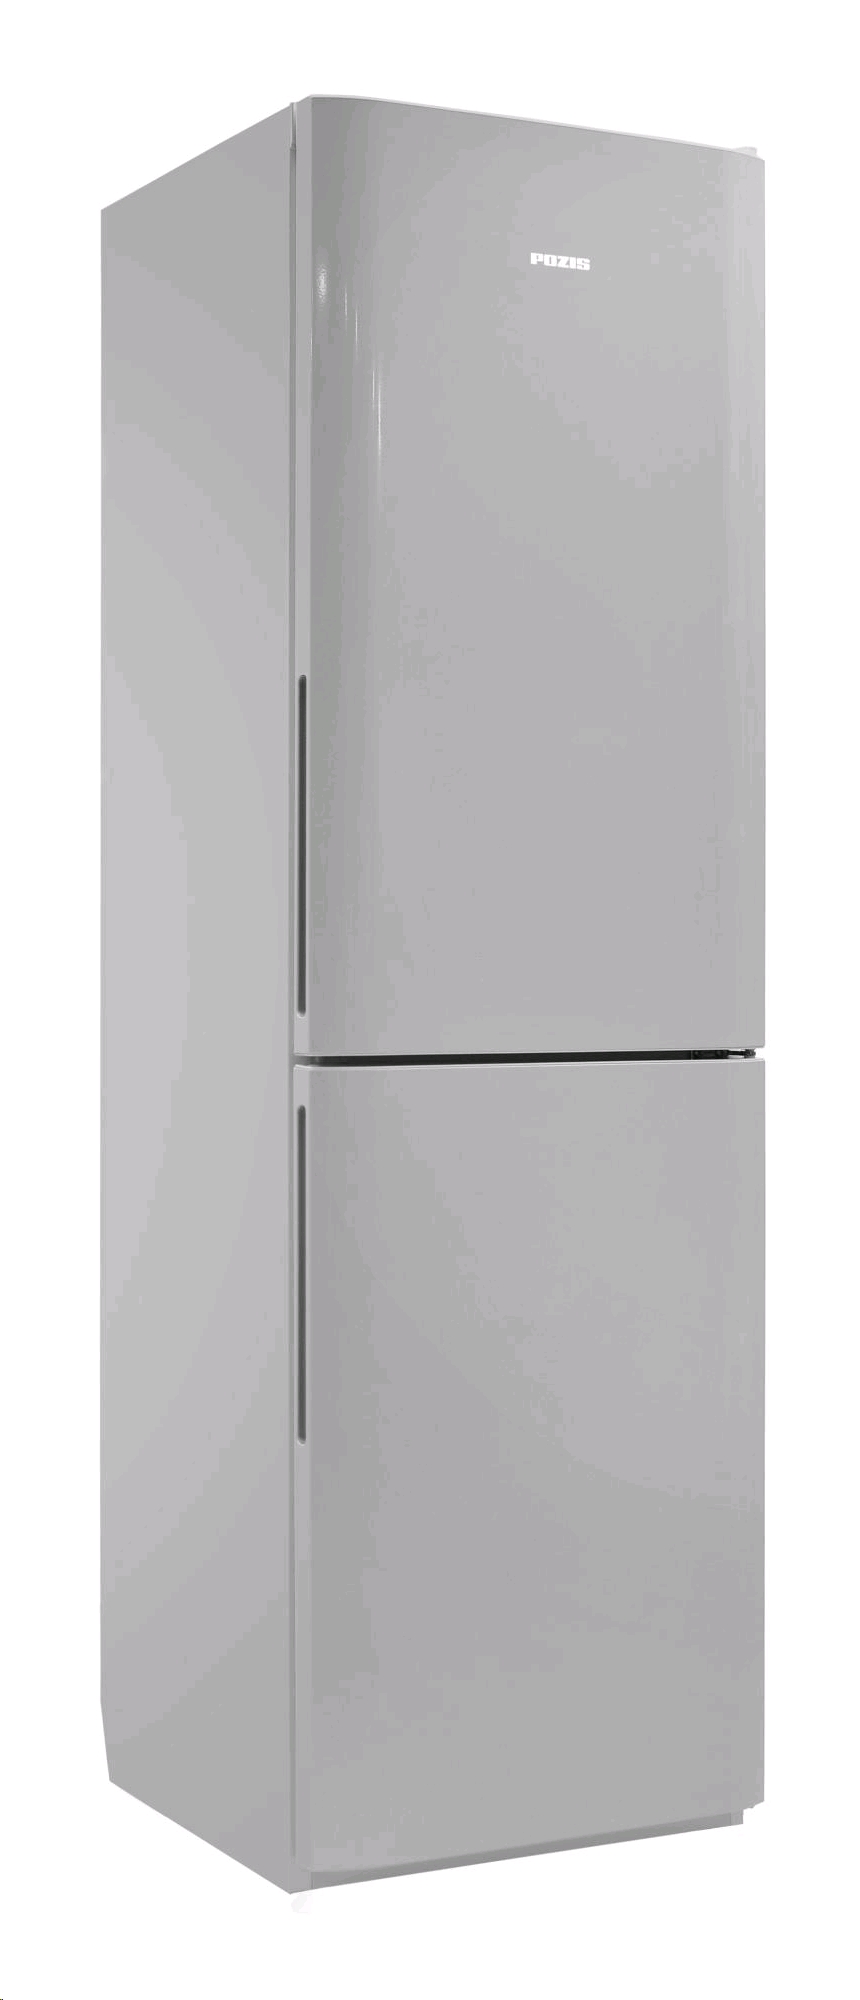 Pozis RK FNF-172 s серебристый *Уценка с/н 576LV10011701 холодильник